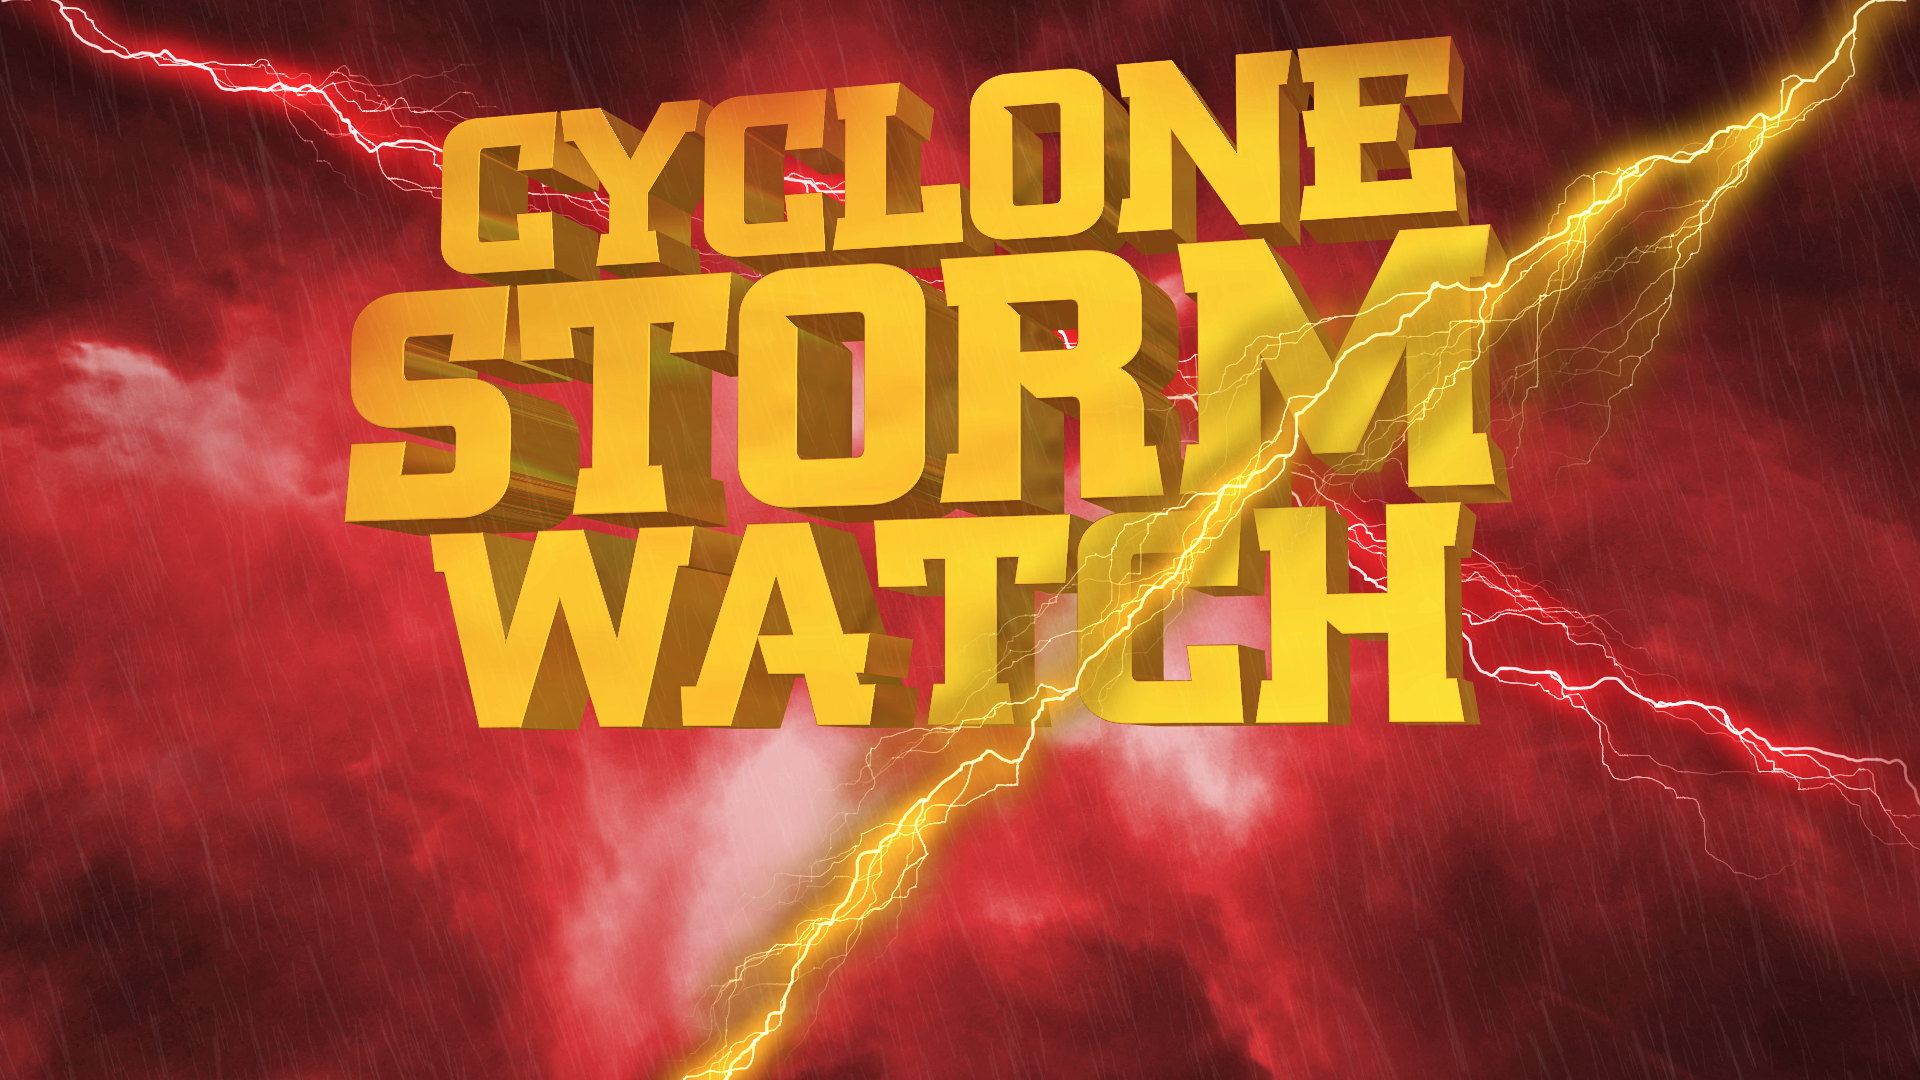 Cyclone Storm Watch Feb. 2nd State University Athletics